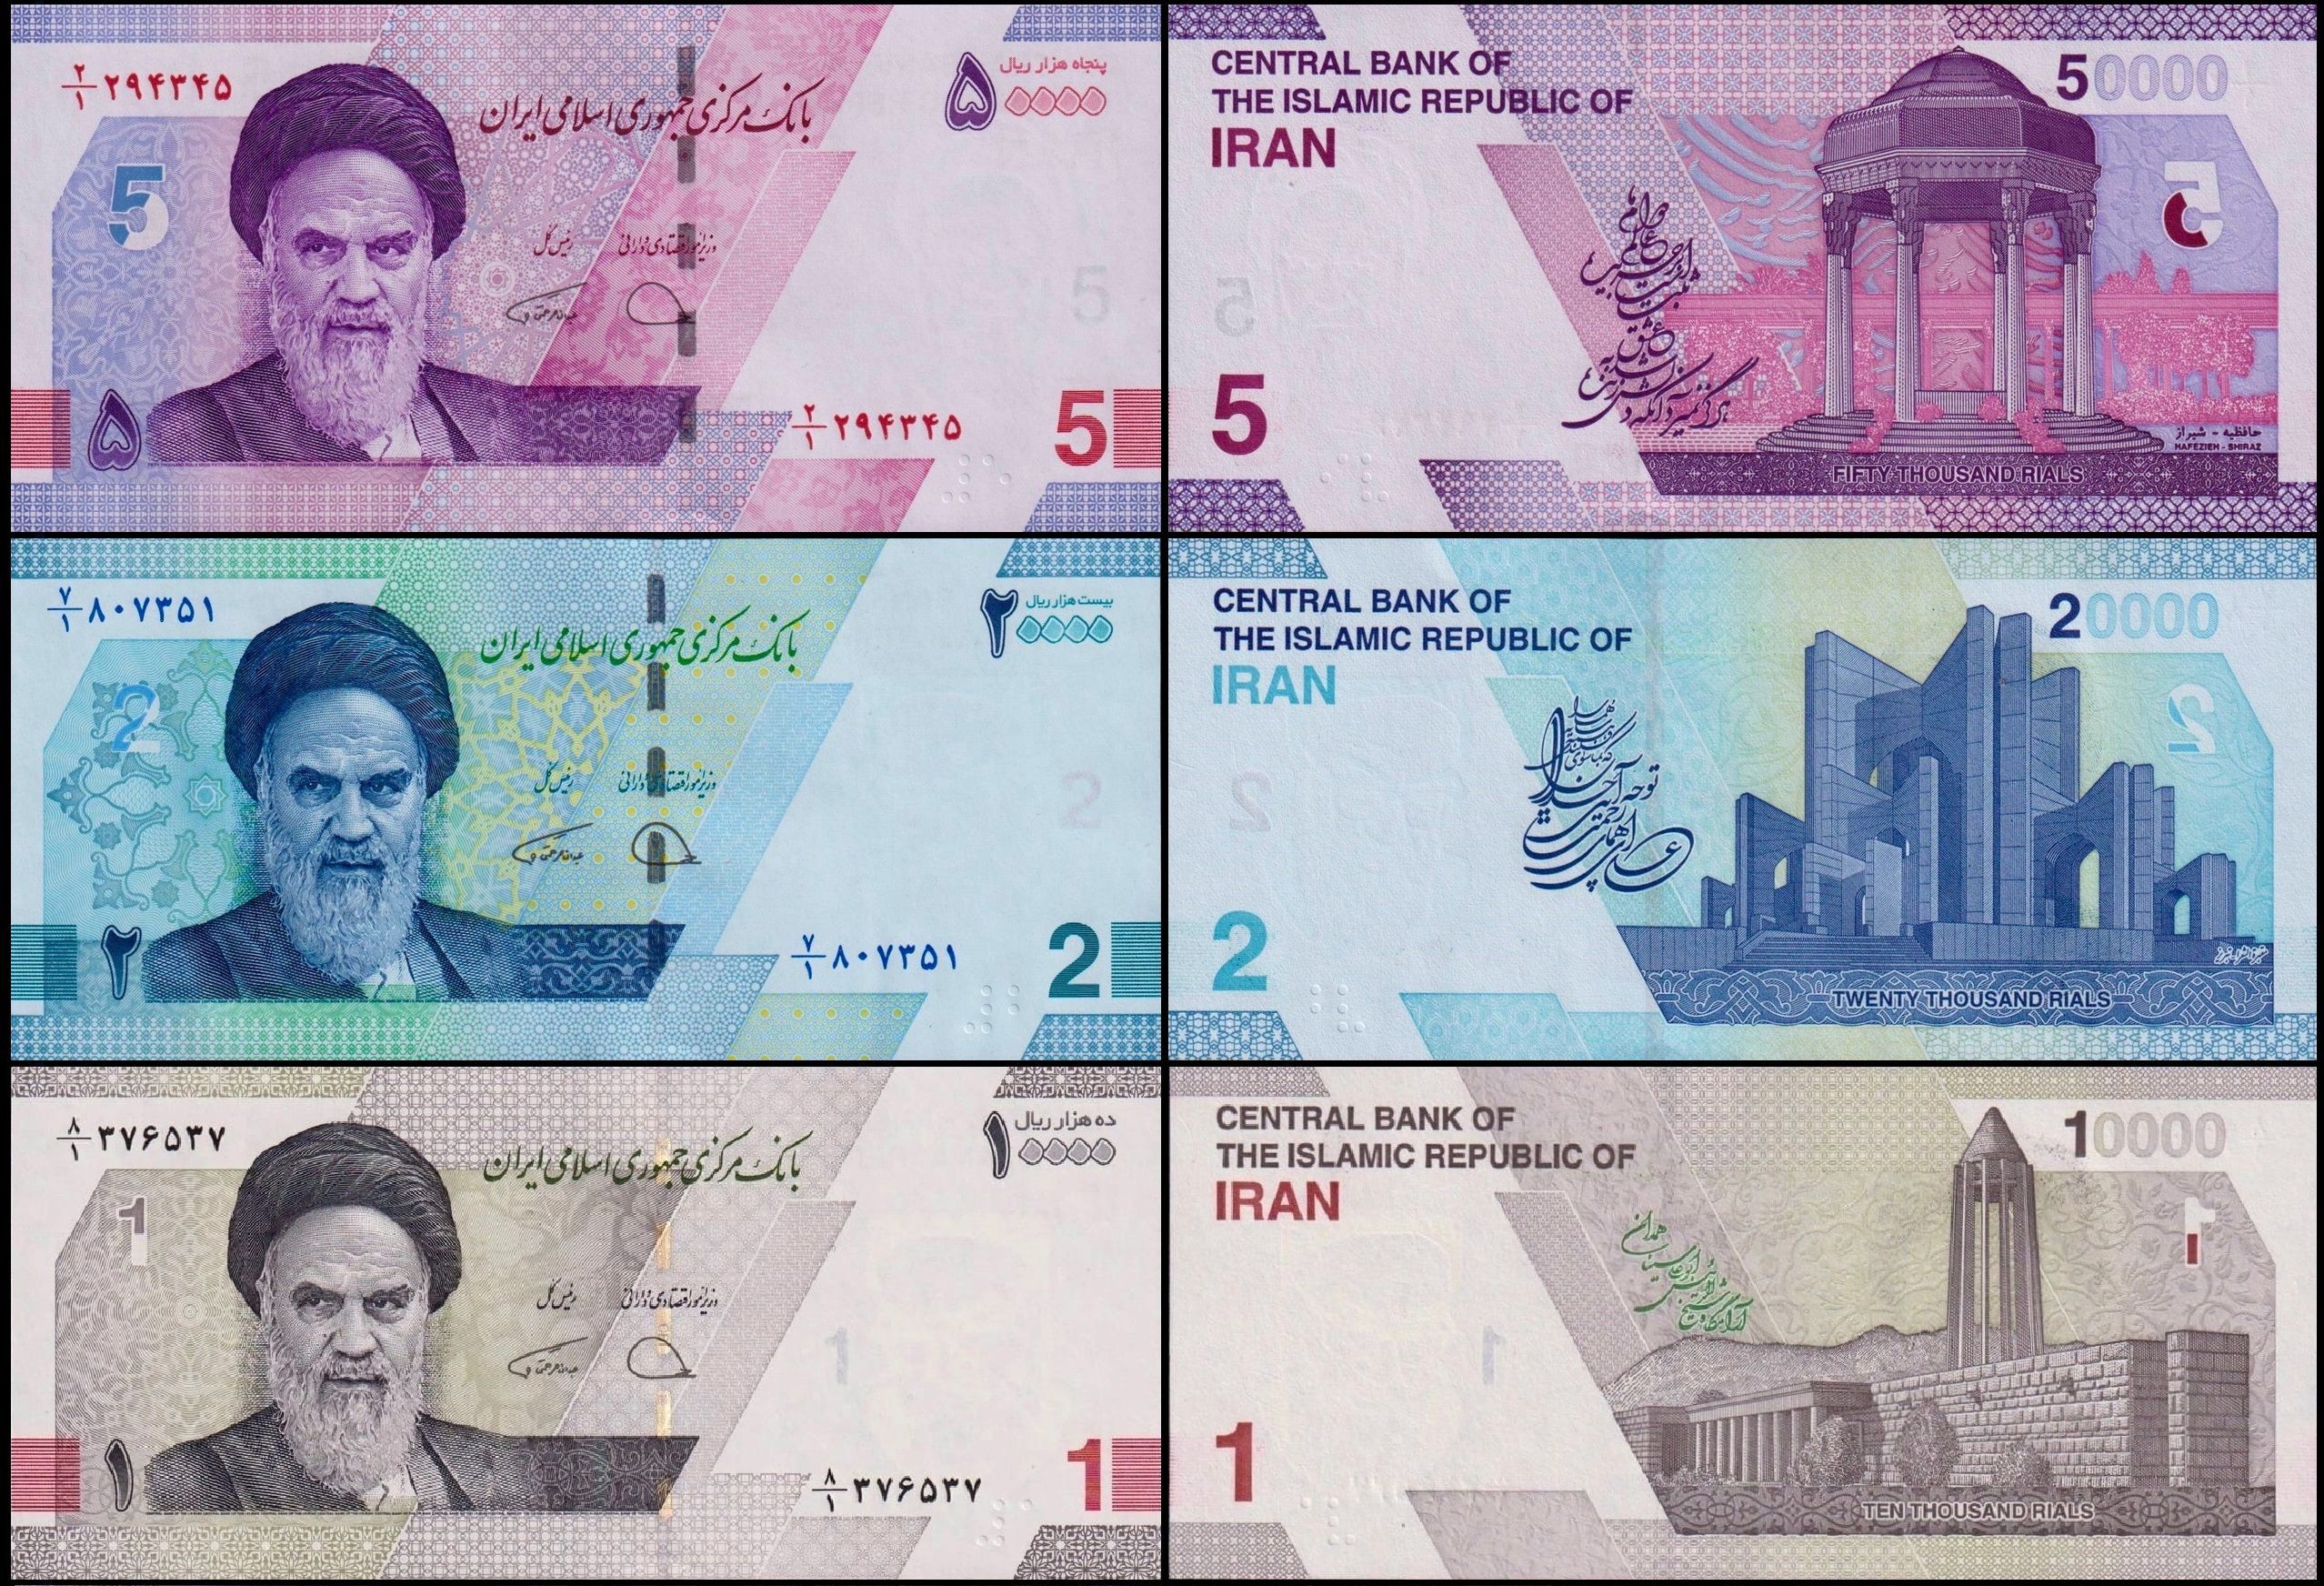 20000 Риалов. 10000 Риалов. Новые банкноты Ирана видео. 1 Риал на туман.